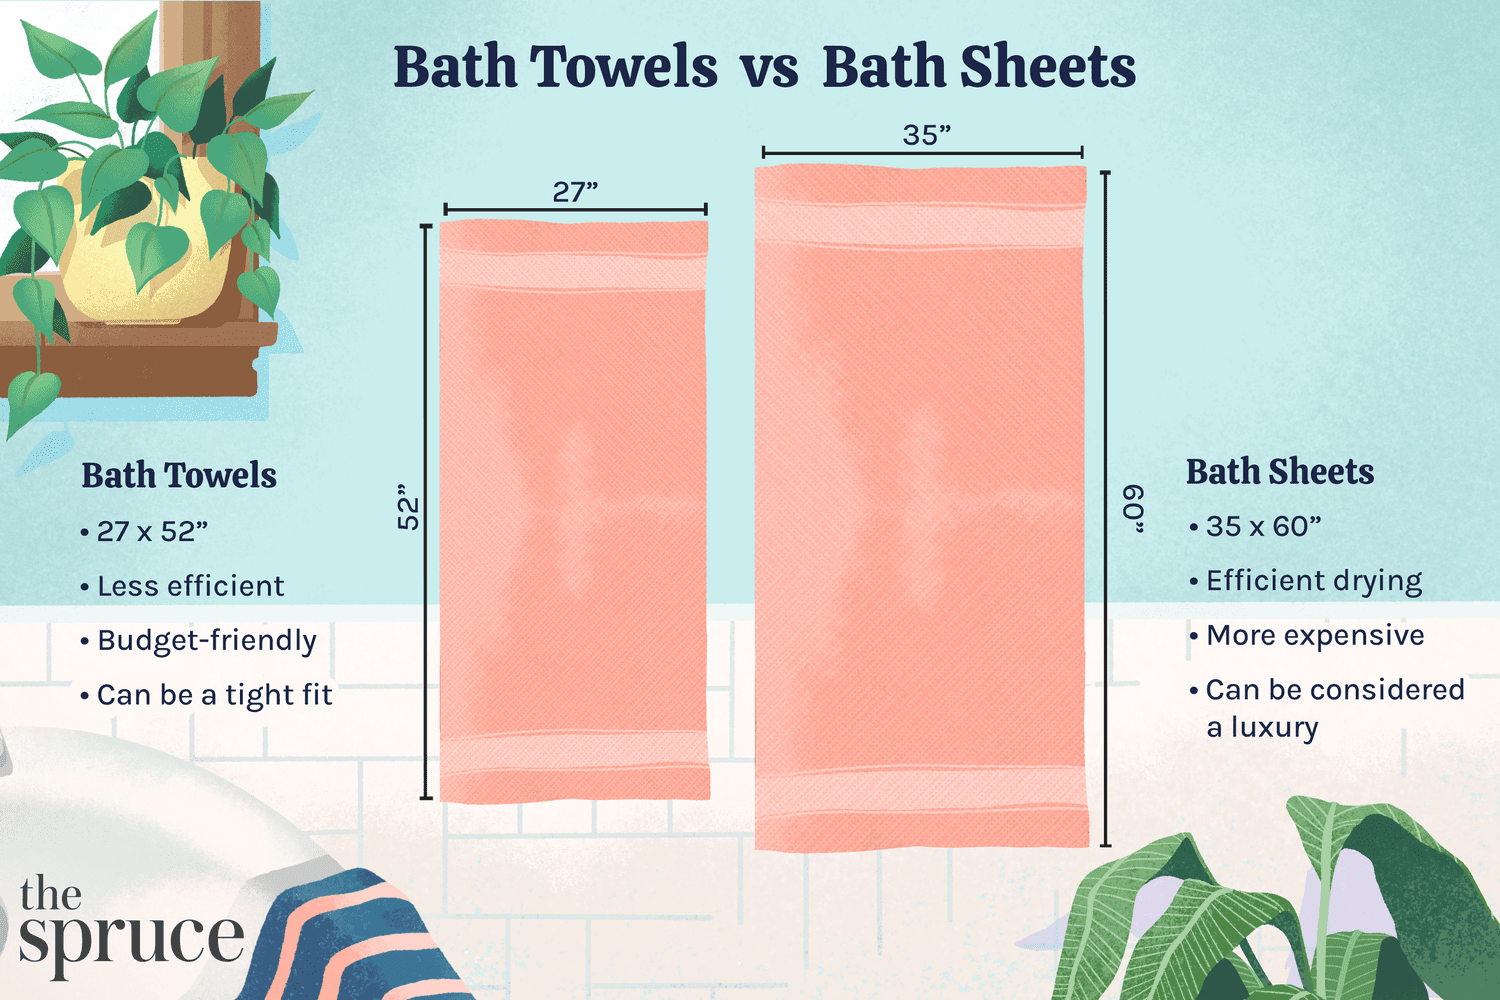 Bath sheets vs bath towels ease of laundering